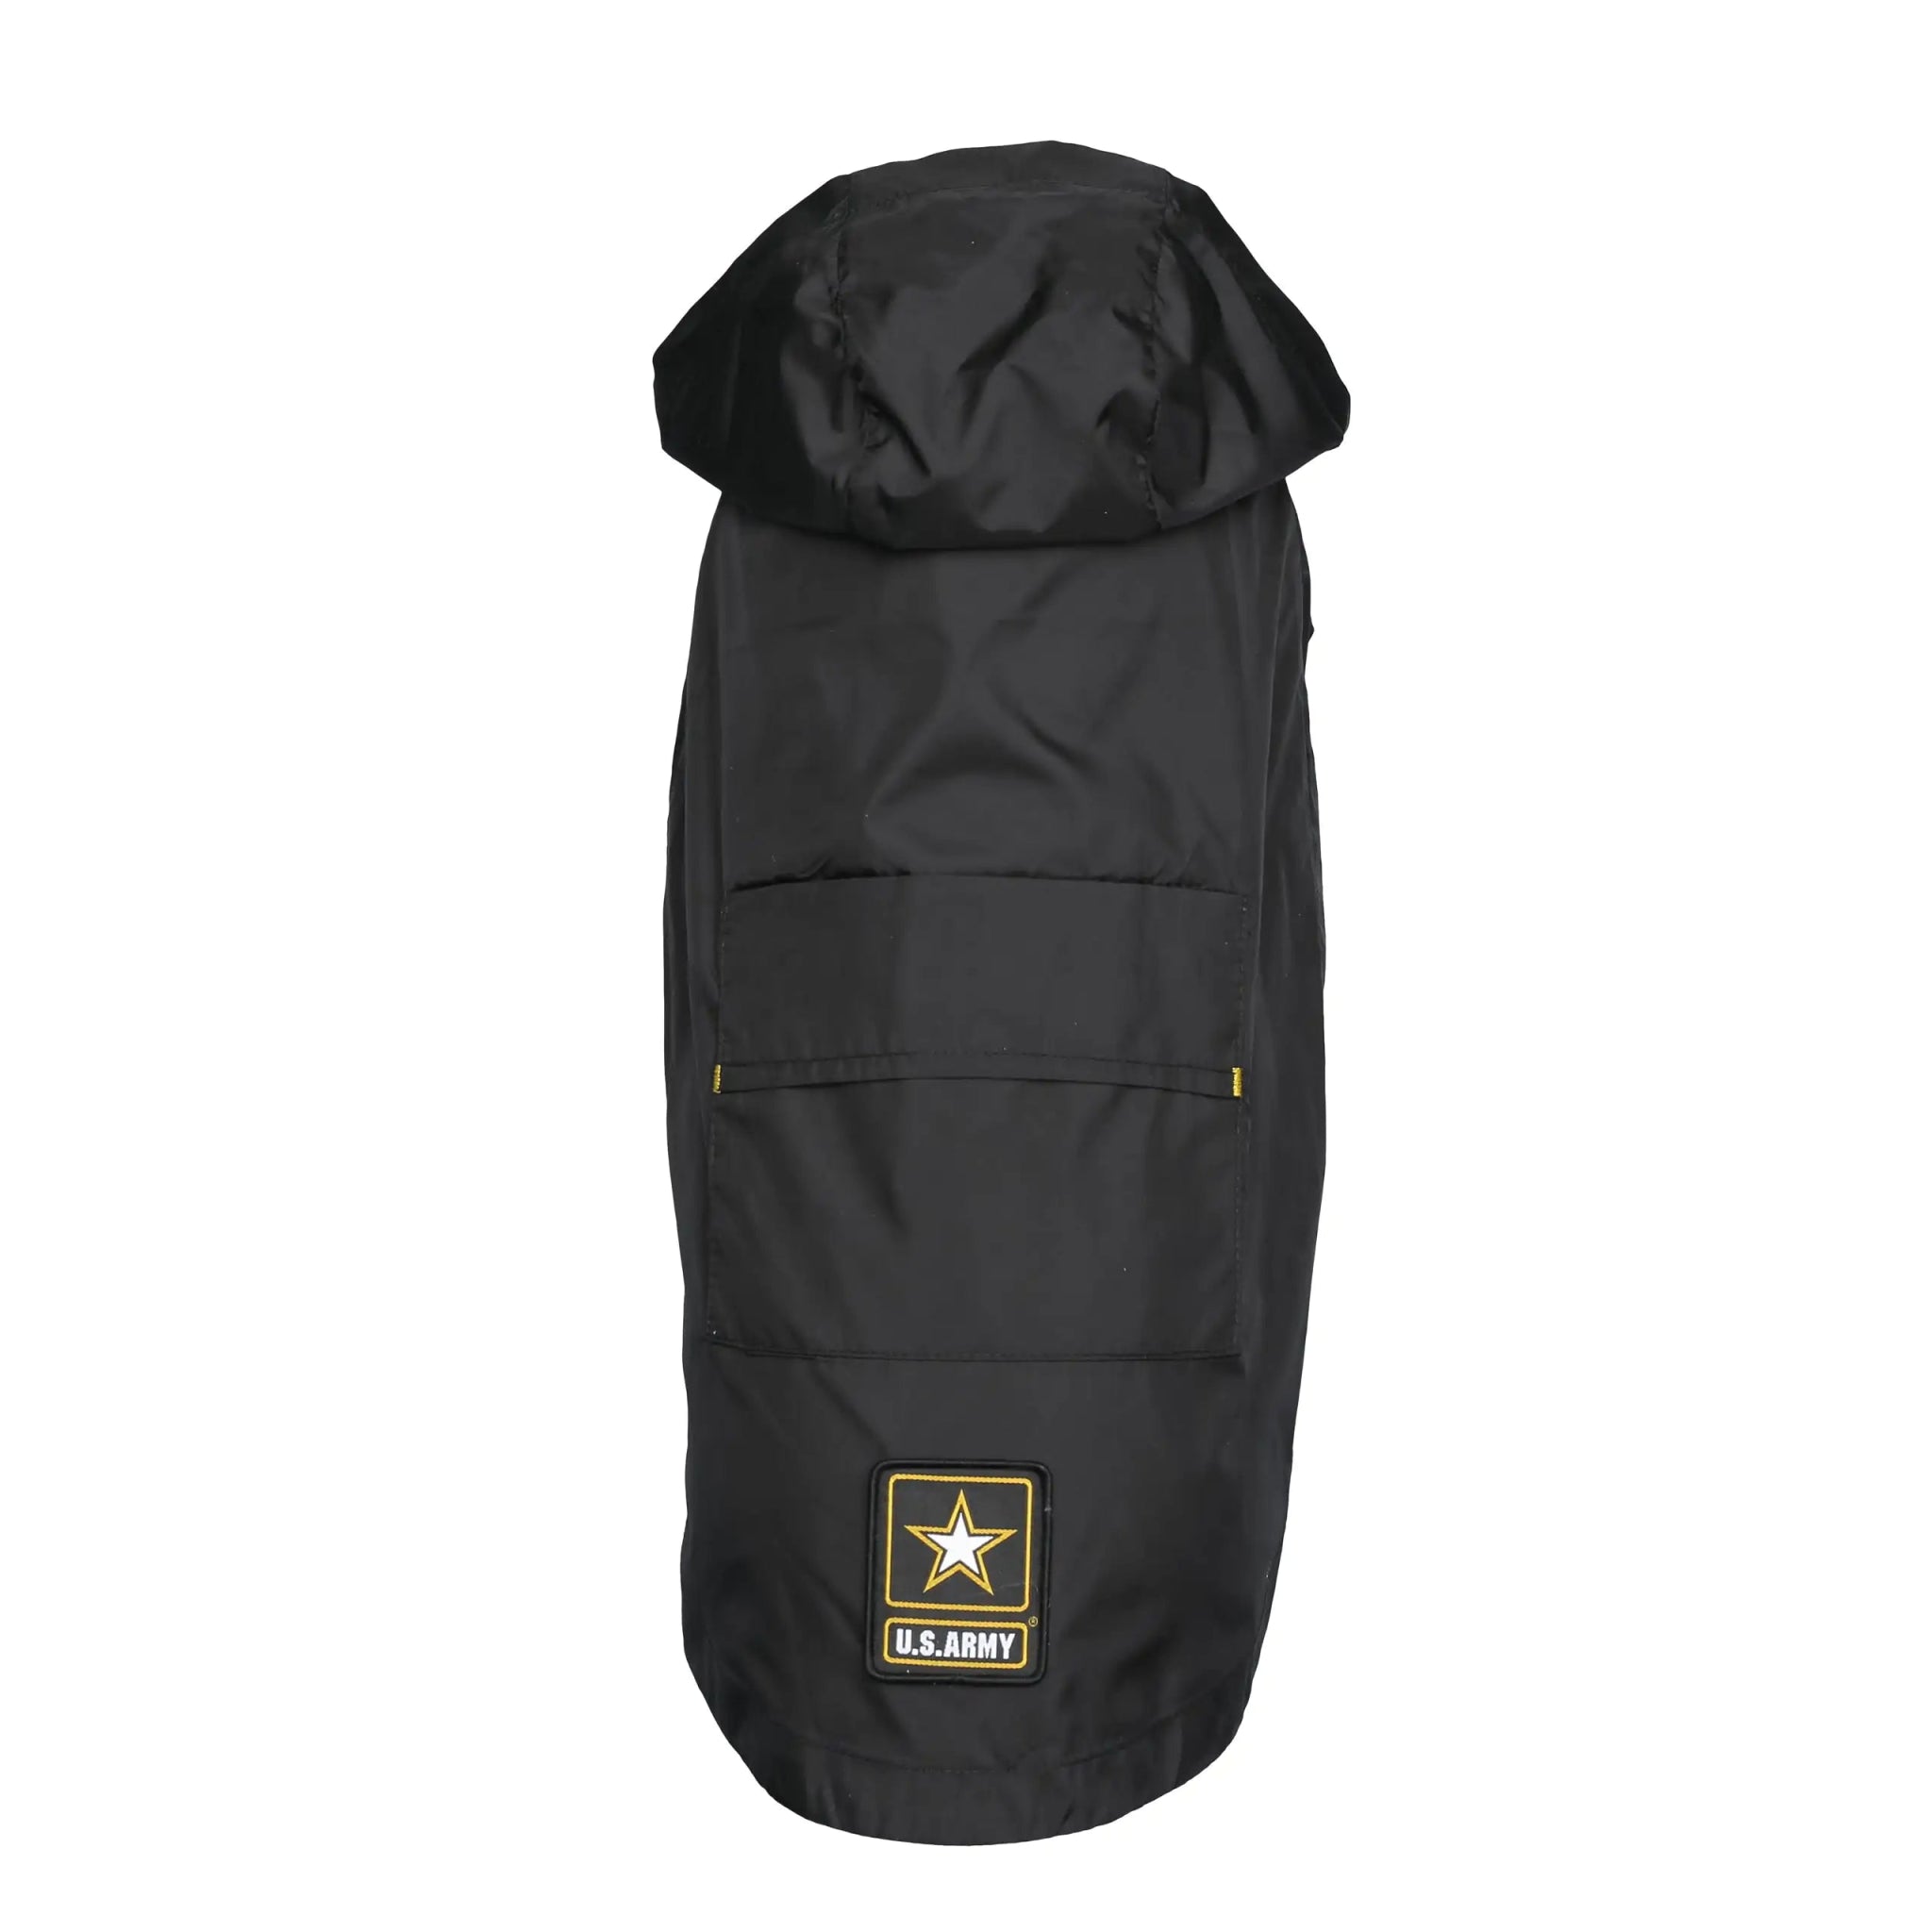 Black Packable Dog Raincoat - ItemBear.com